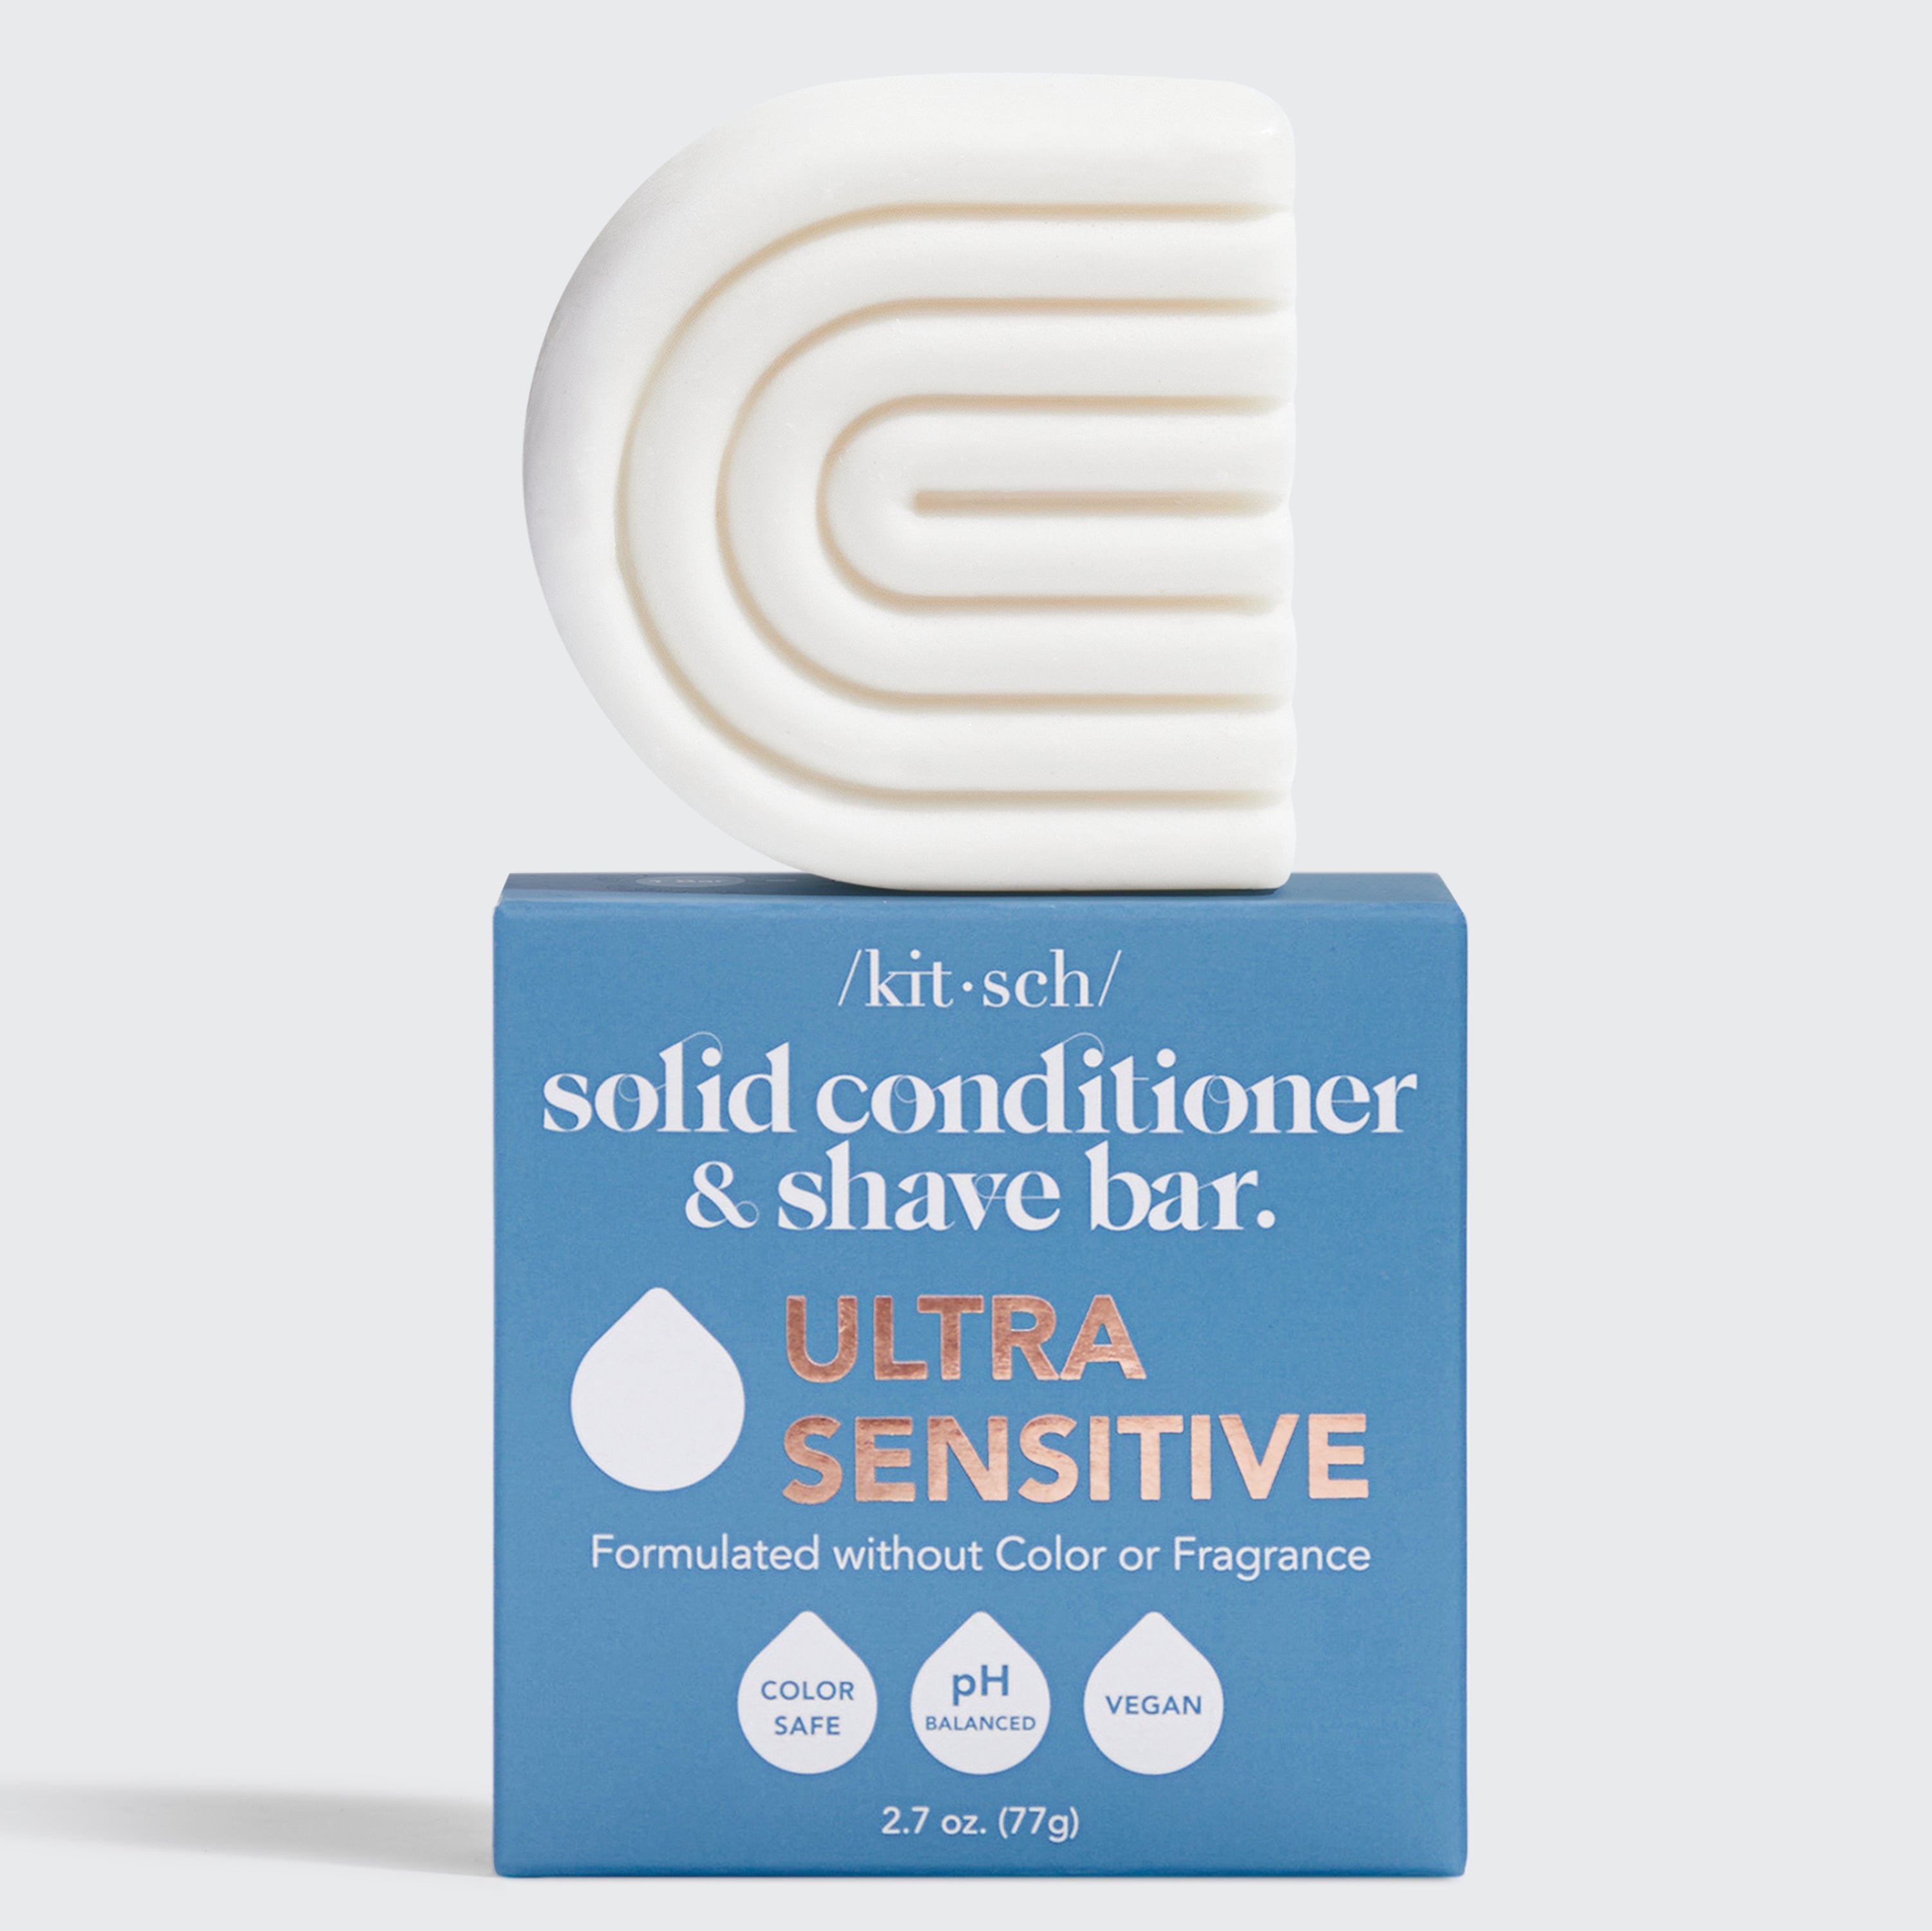 Ultra Sensitive Solid Conditioner & Shave Bar